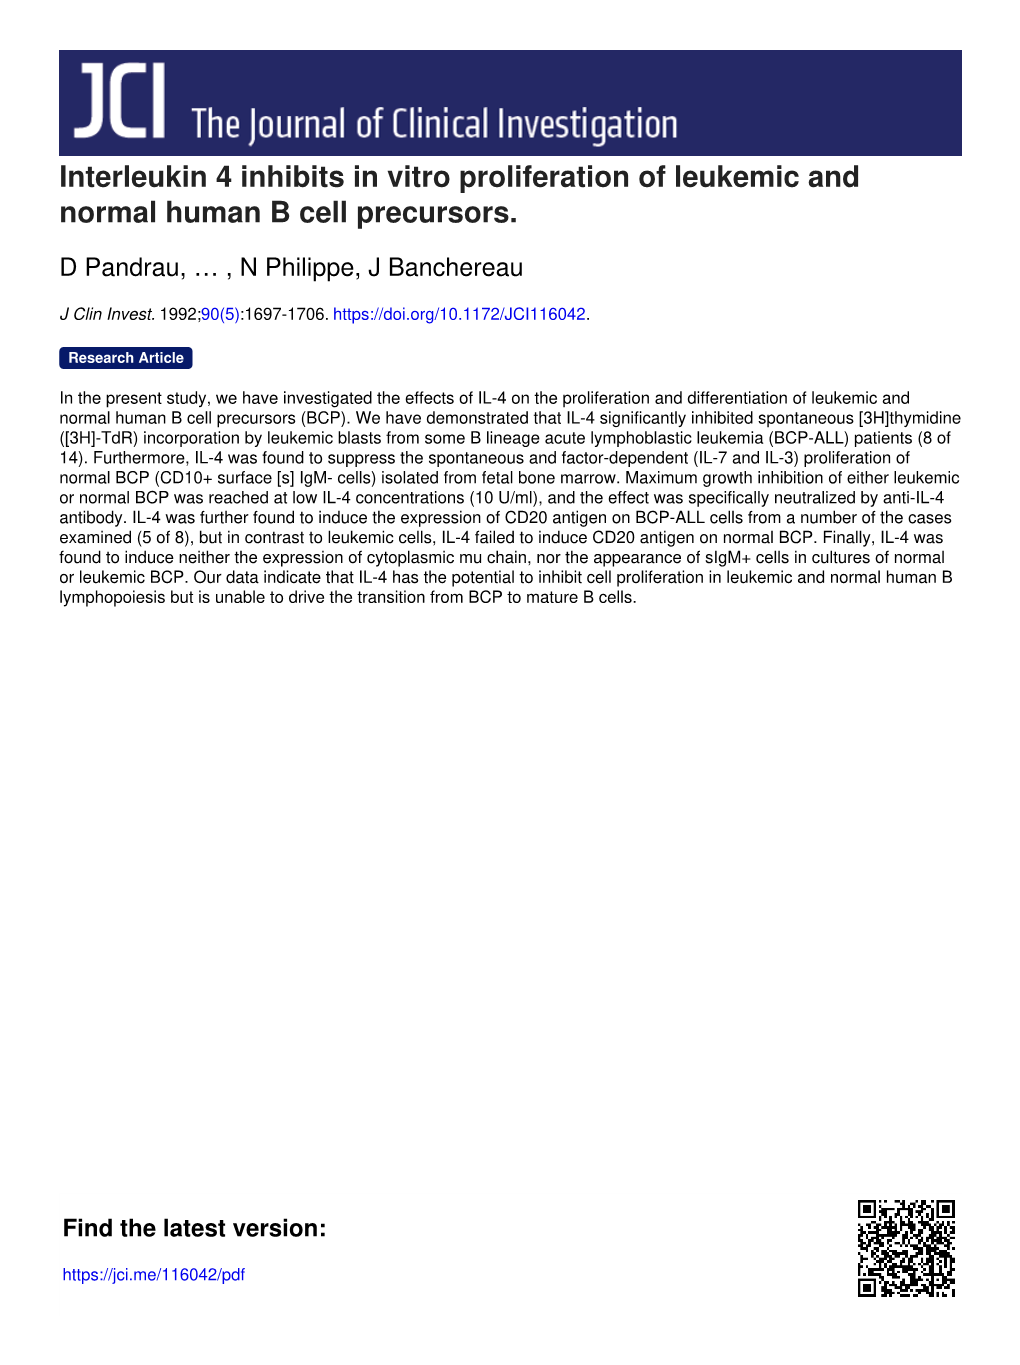 Interleukin 4 Inhibits in Vitro Proliferation of Leukemic and Normal Human B Cell Precursors